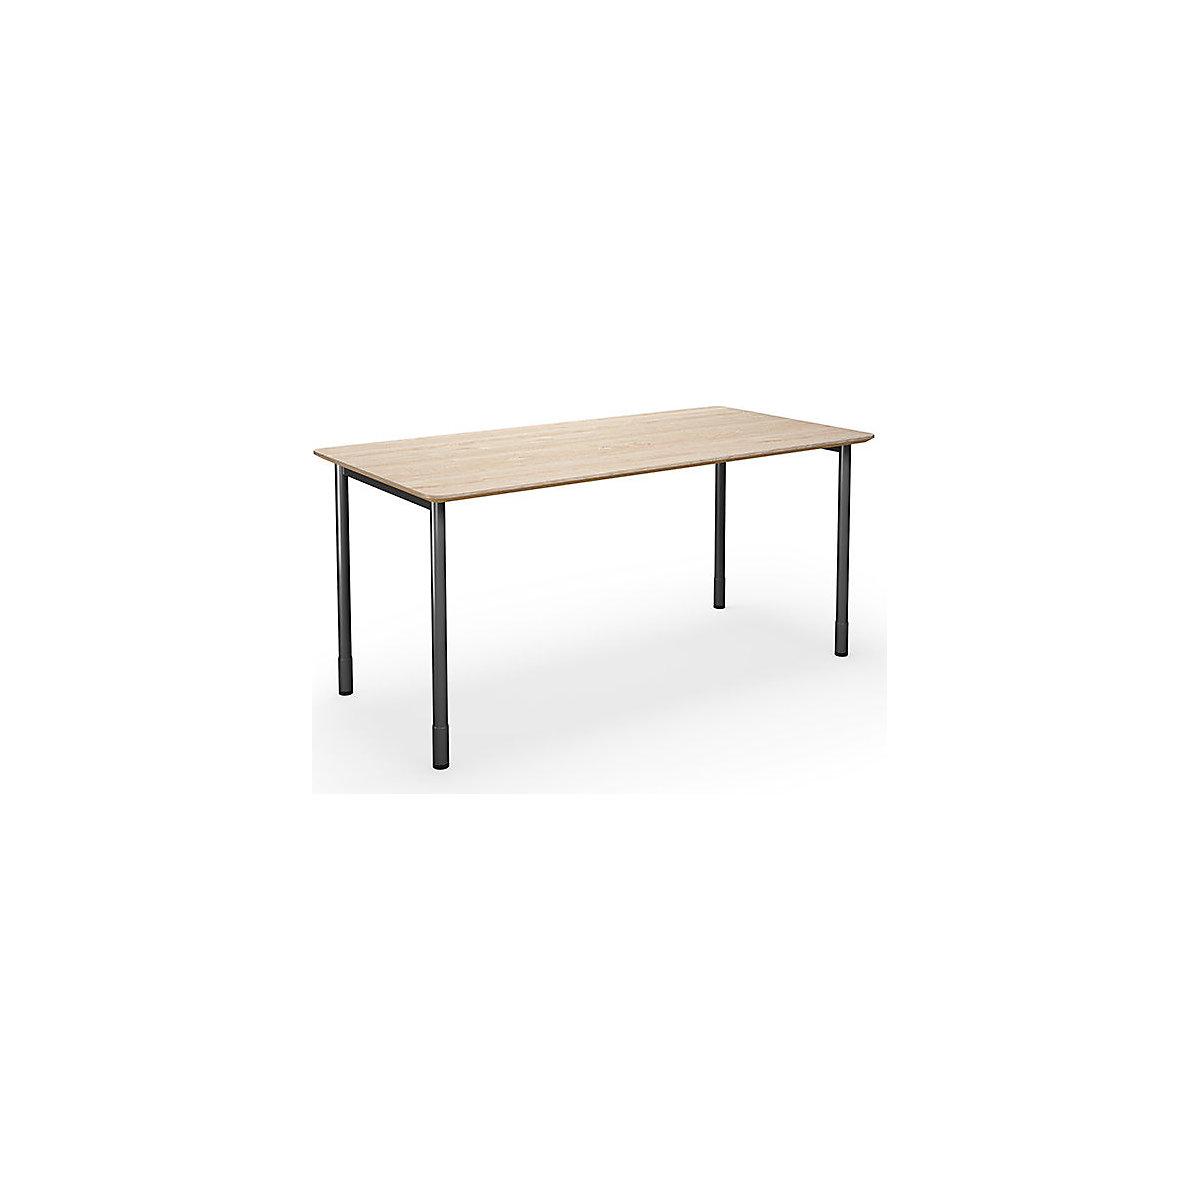 DUO-C Trend multi-purpose desk, straight tabletop, rounded corners, WxD 1600 x 800 mm, oak, black-2